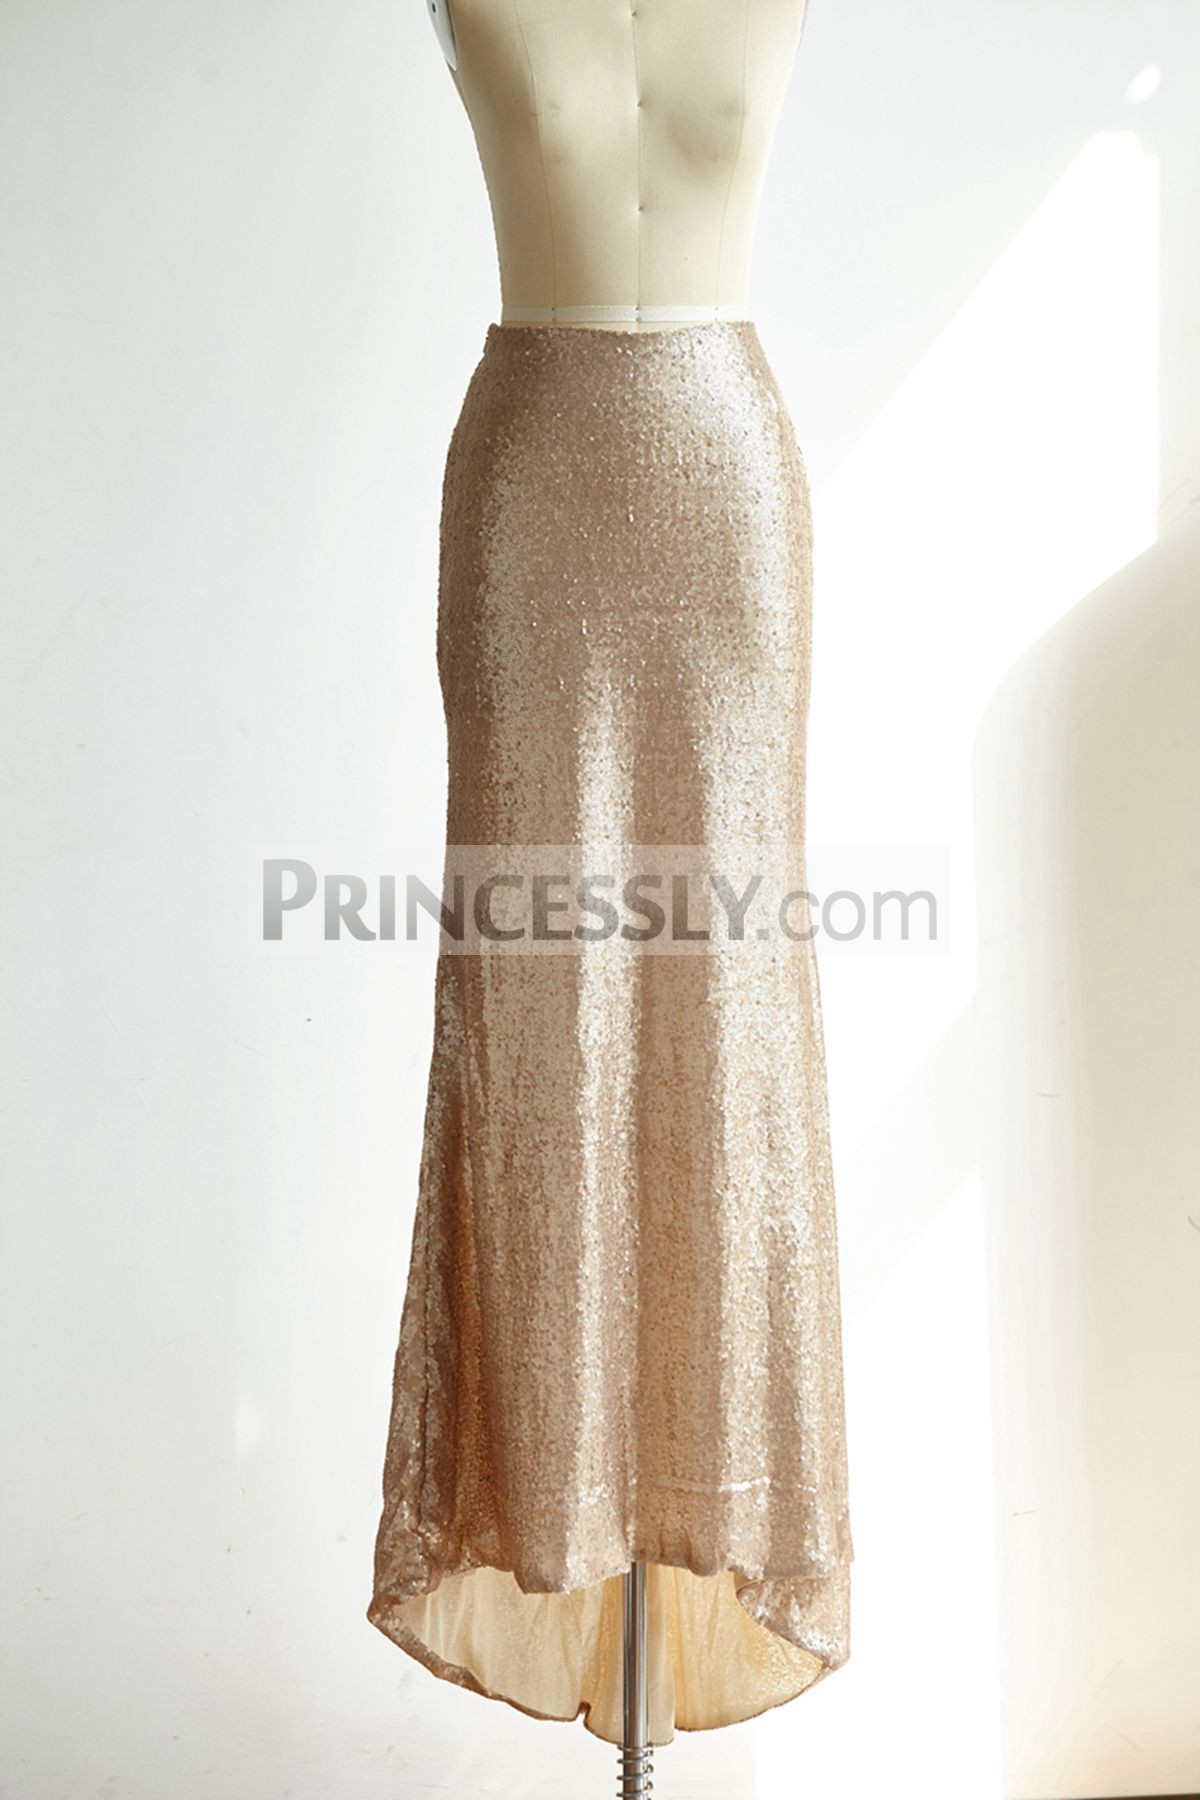 Princessly.com-K1000310-Matte Champagne Gold Long Sequin Fitted Skirt /Wedding Bridesmaid Skirt-31